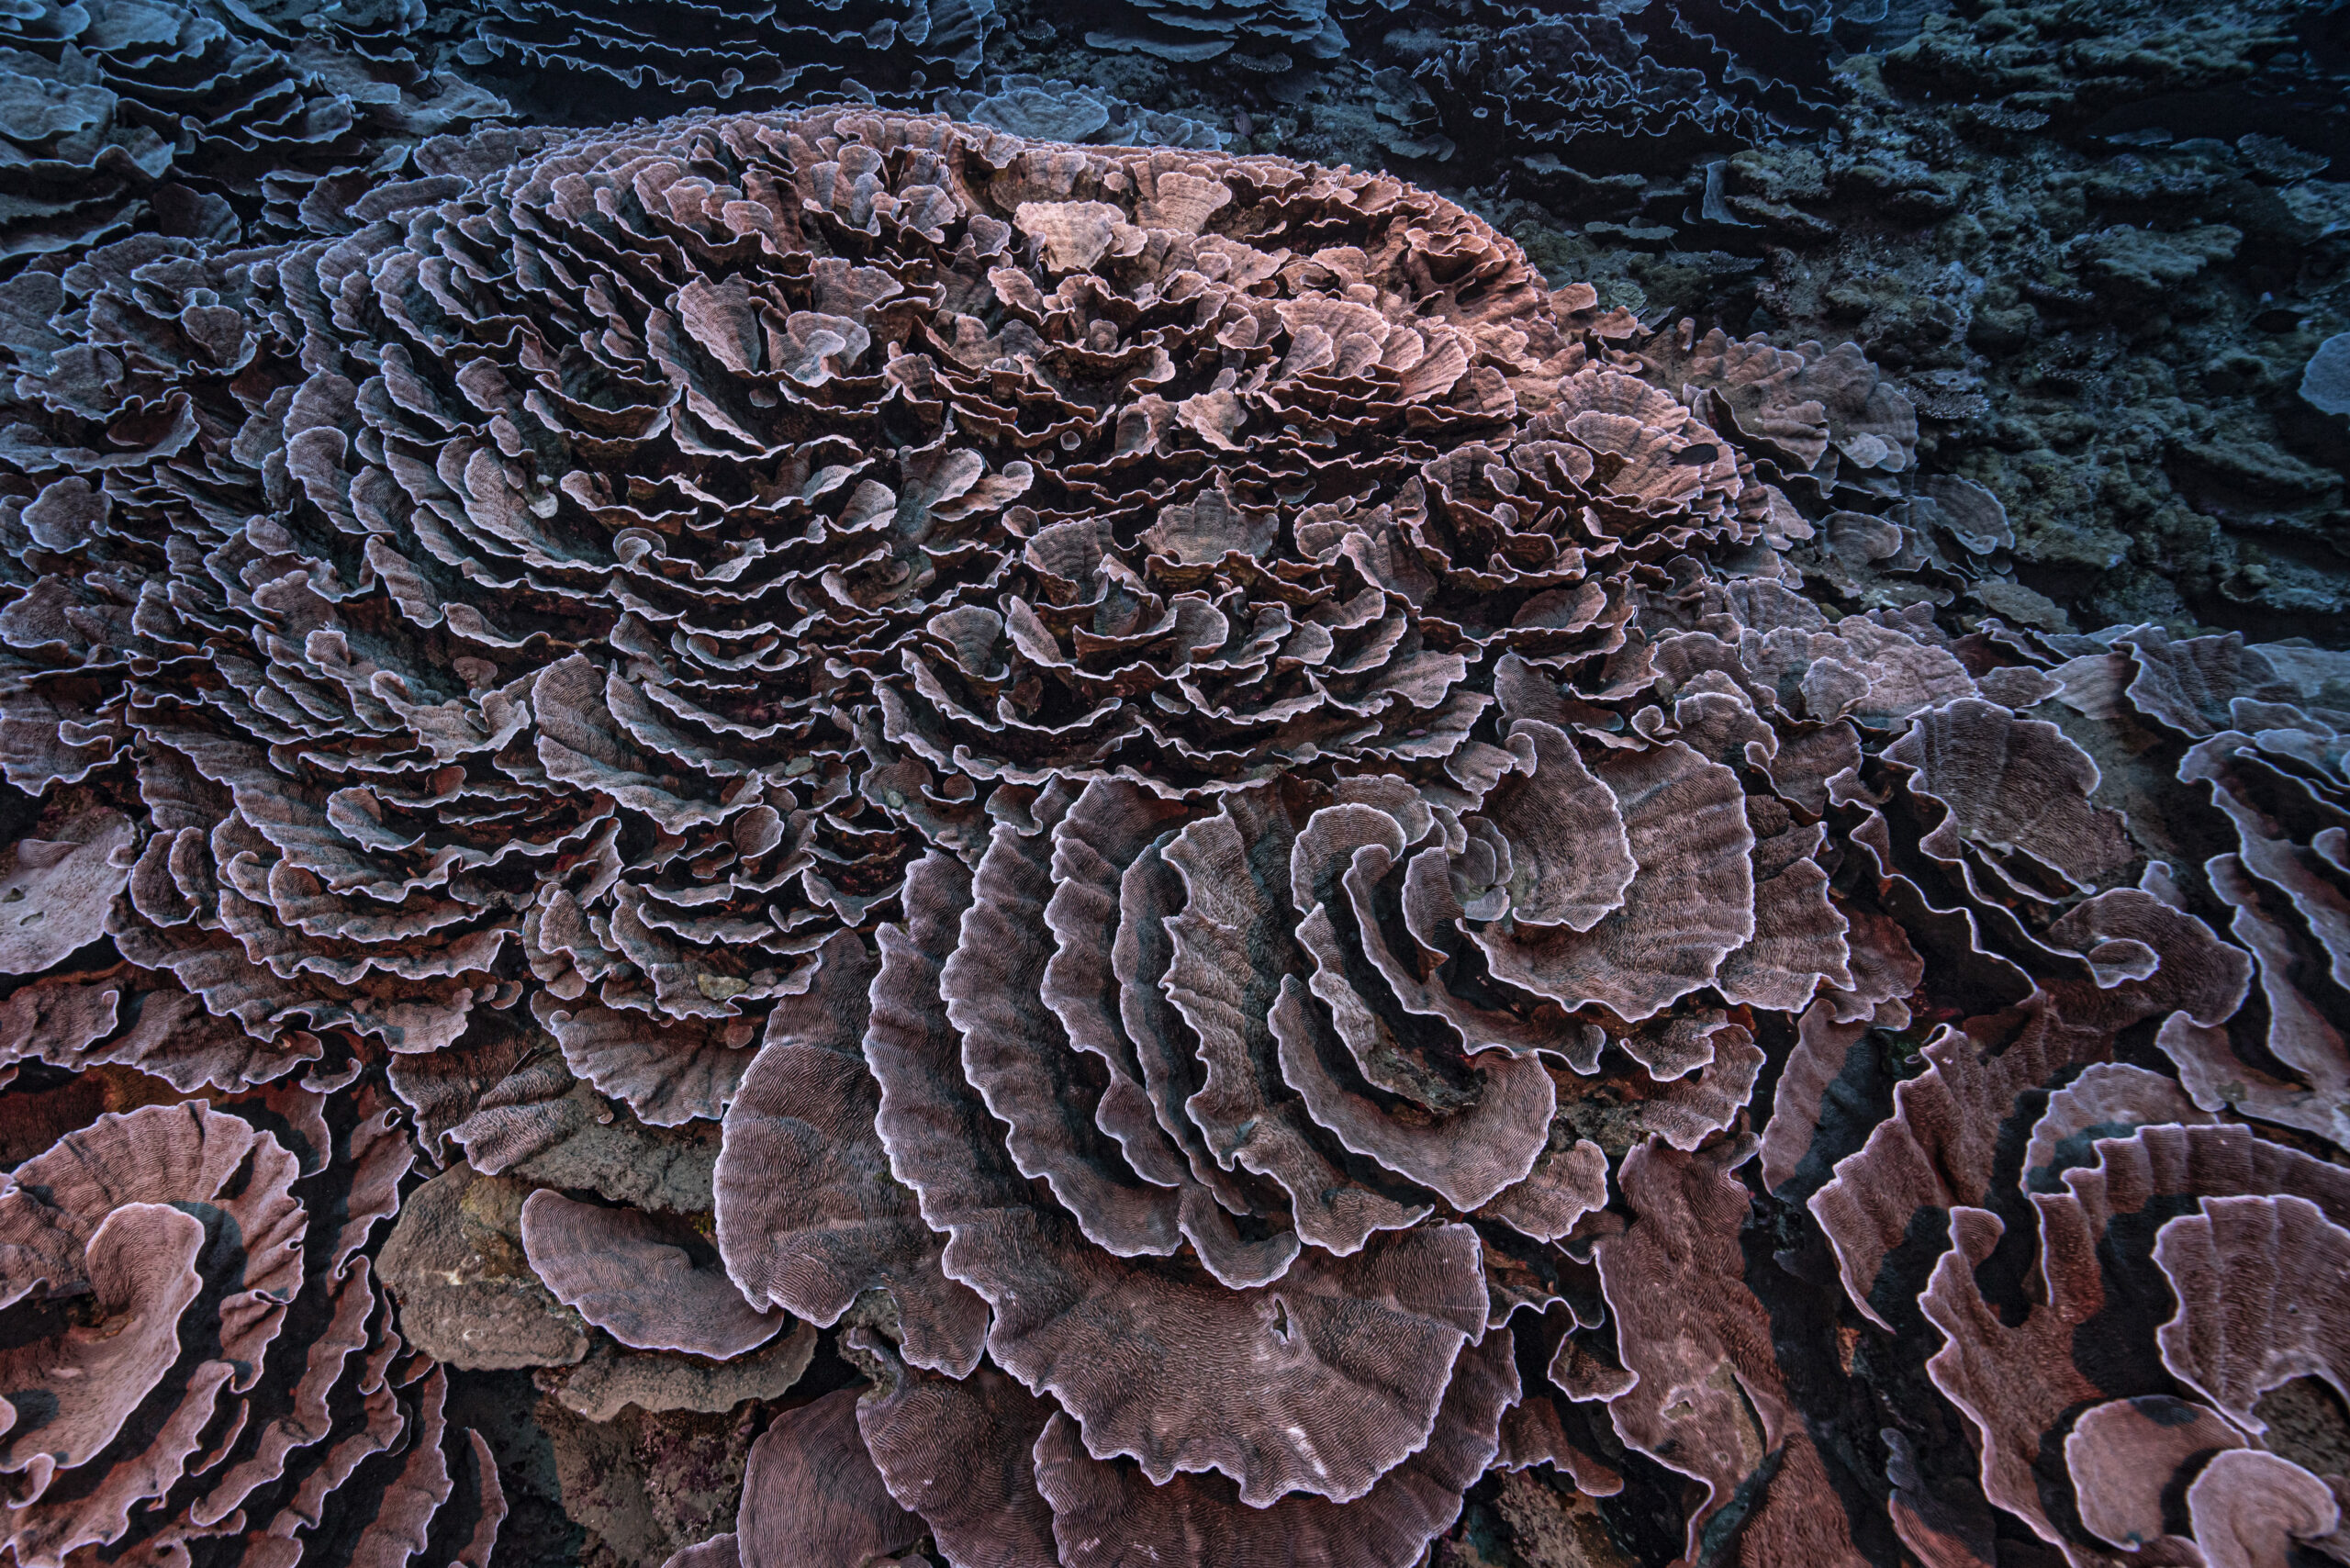 Rare, Pristine Coral Reef Found off Tahiti Coast